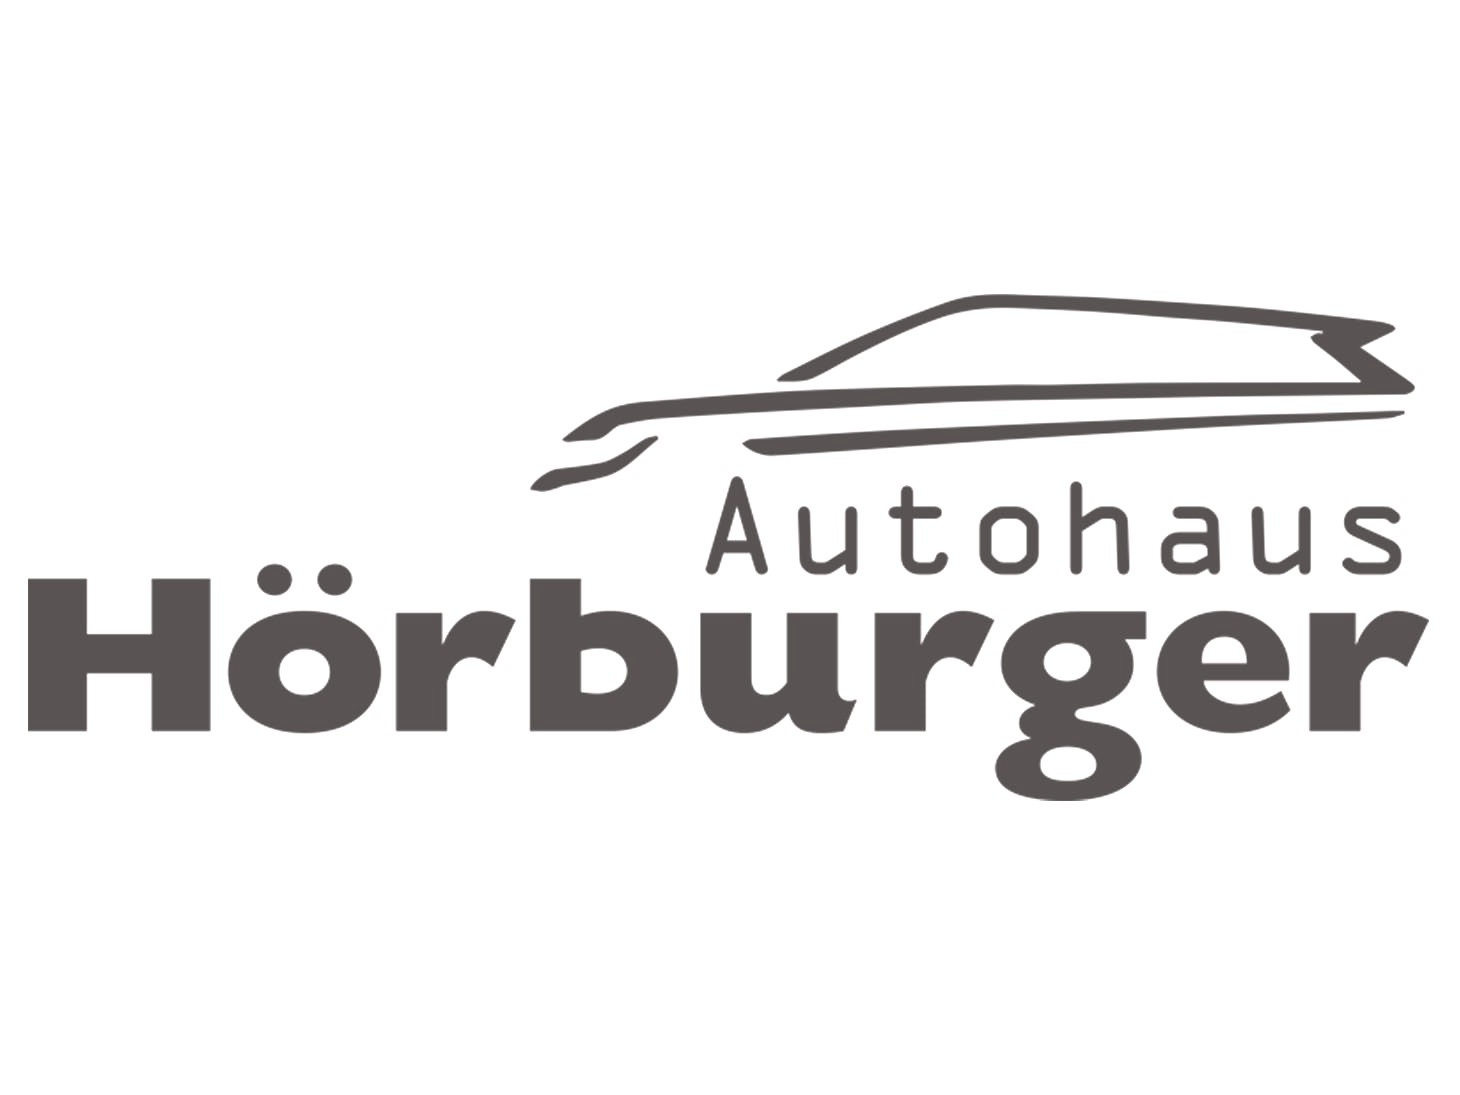 Autohaus Hörburger GmbH & Co KG